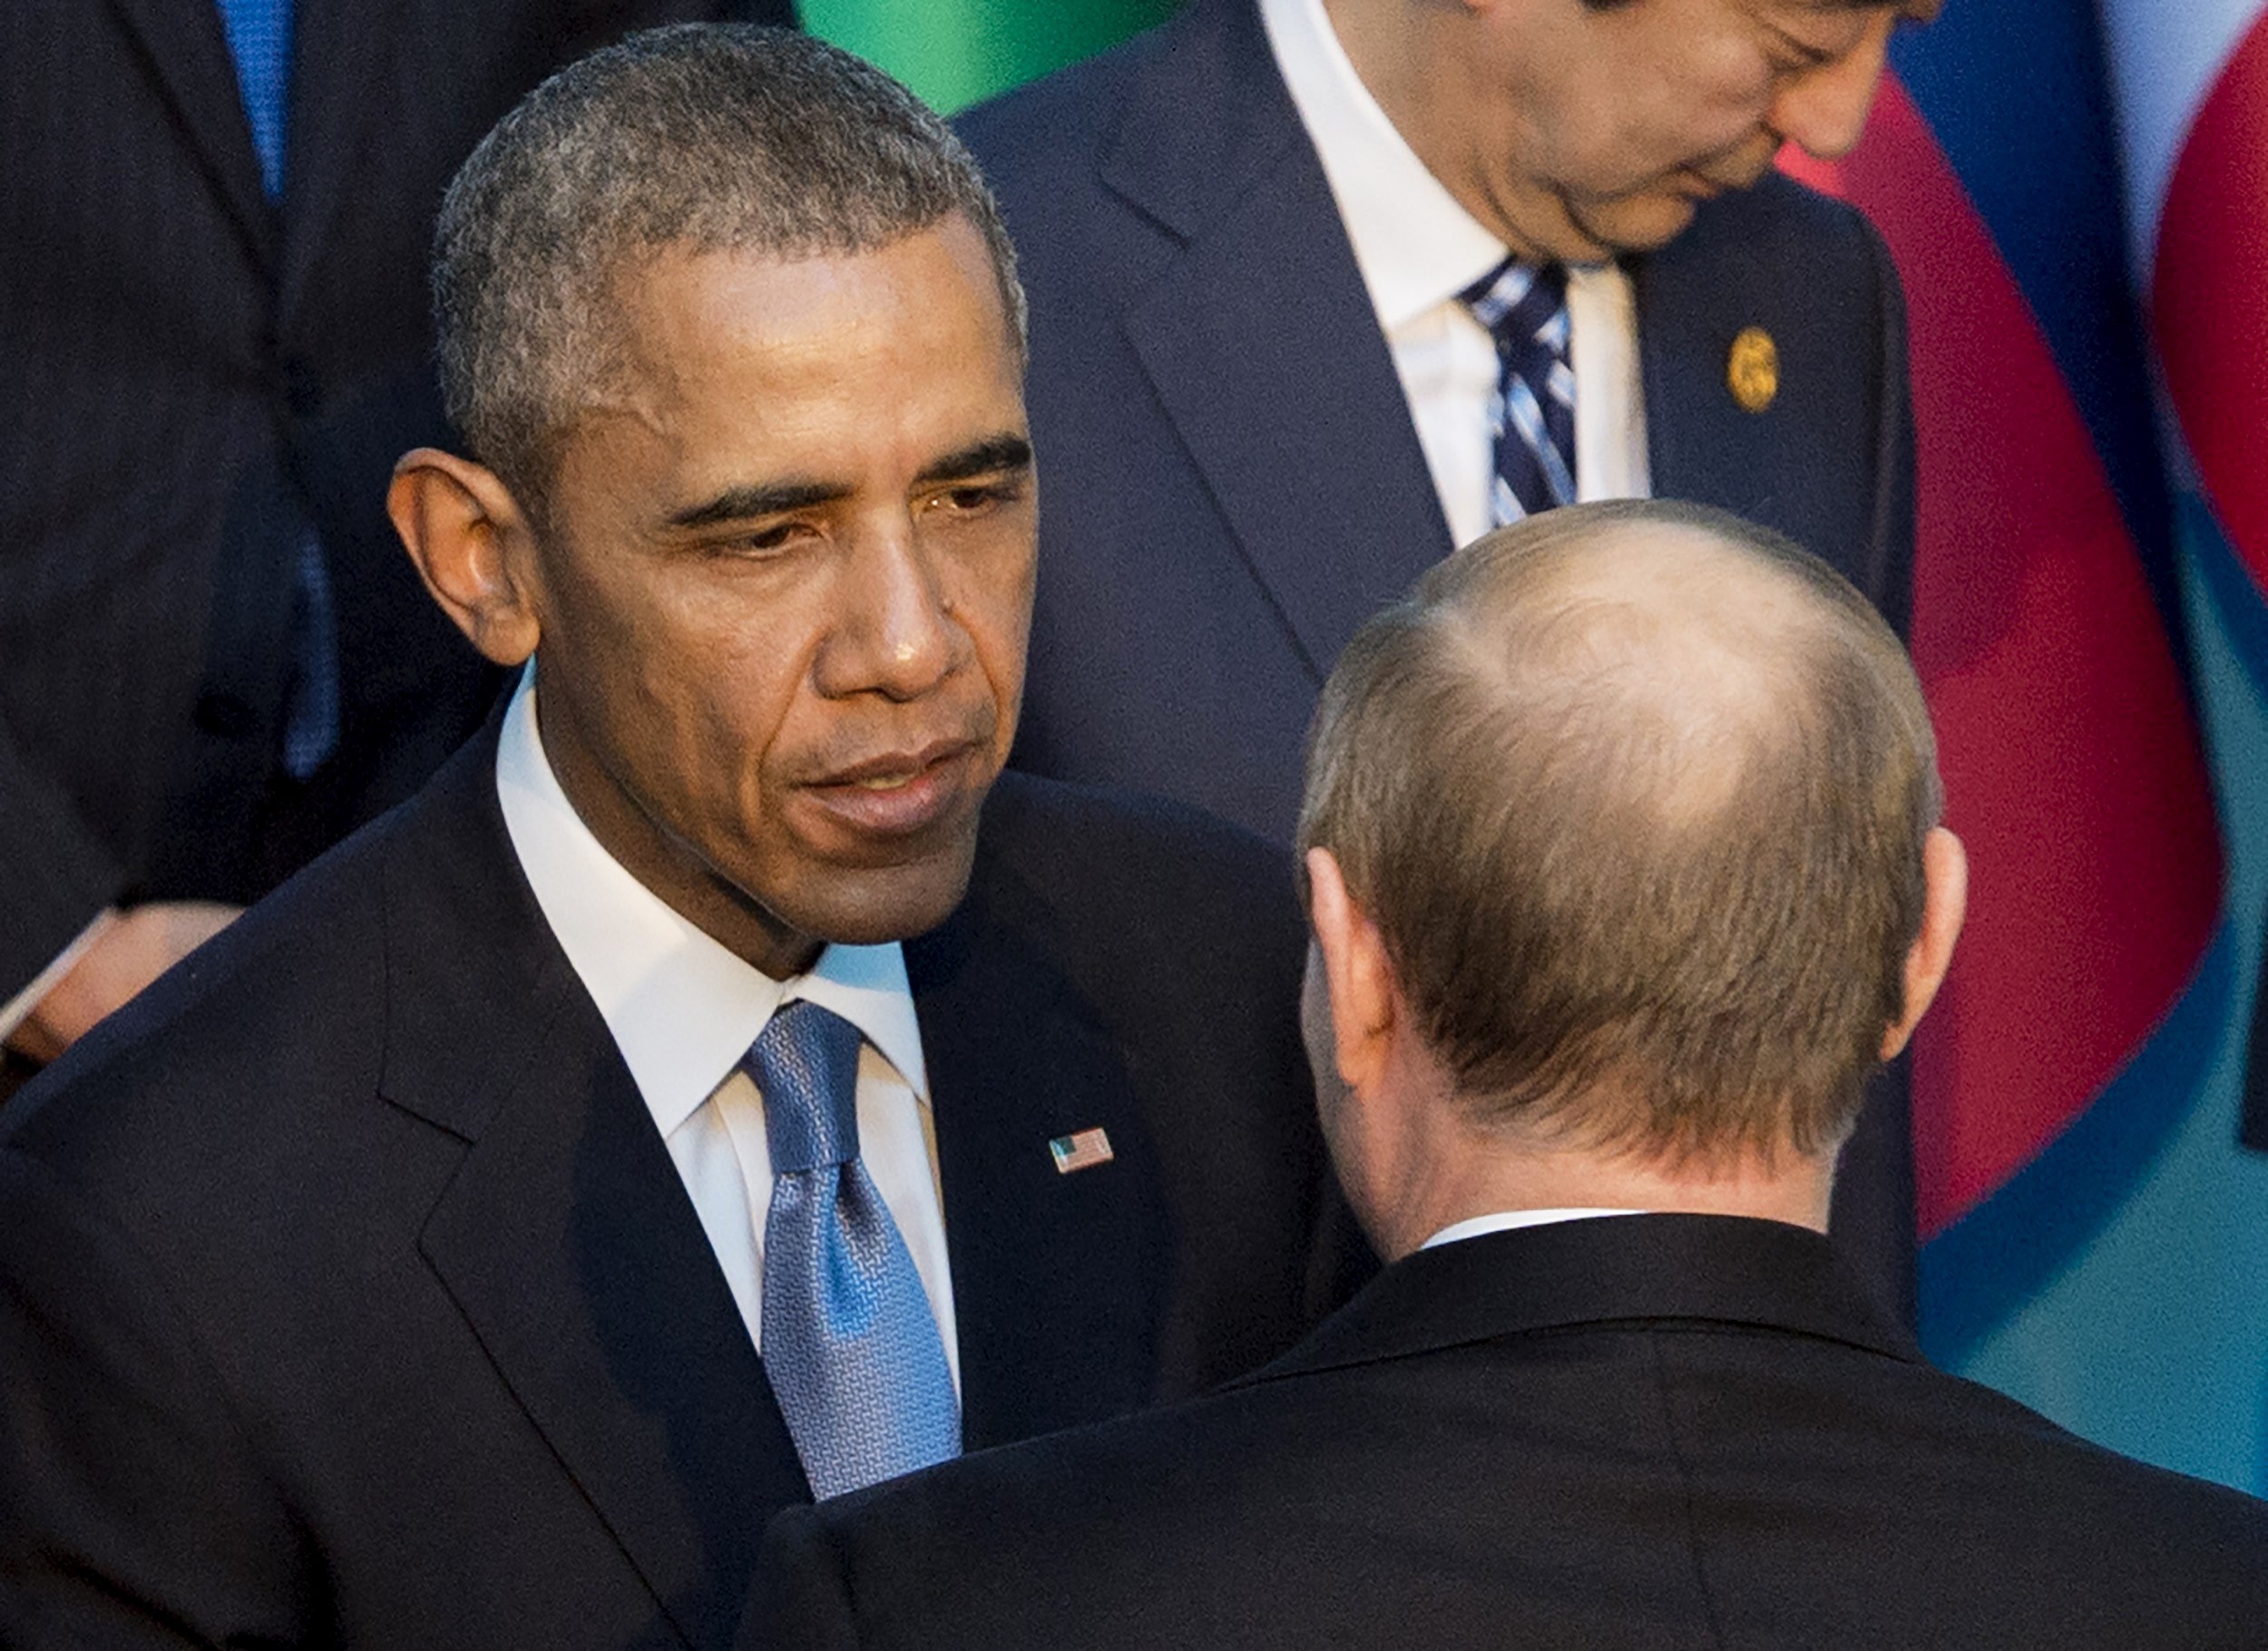 Barack Obama, Vladimir Putin huddle in wake of Paris attacks | CNN Politics